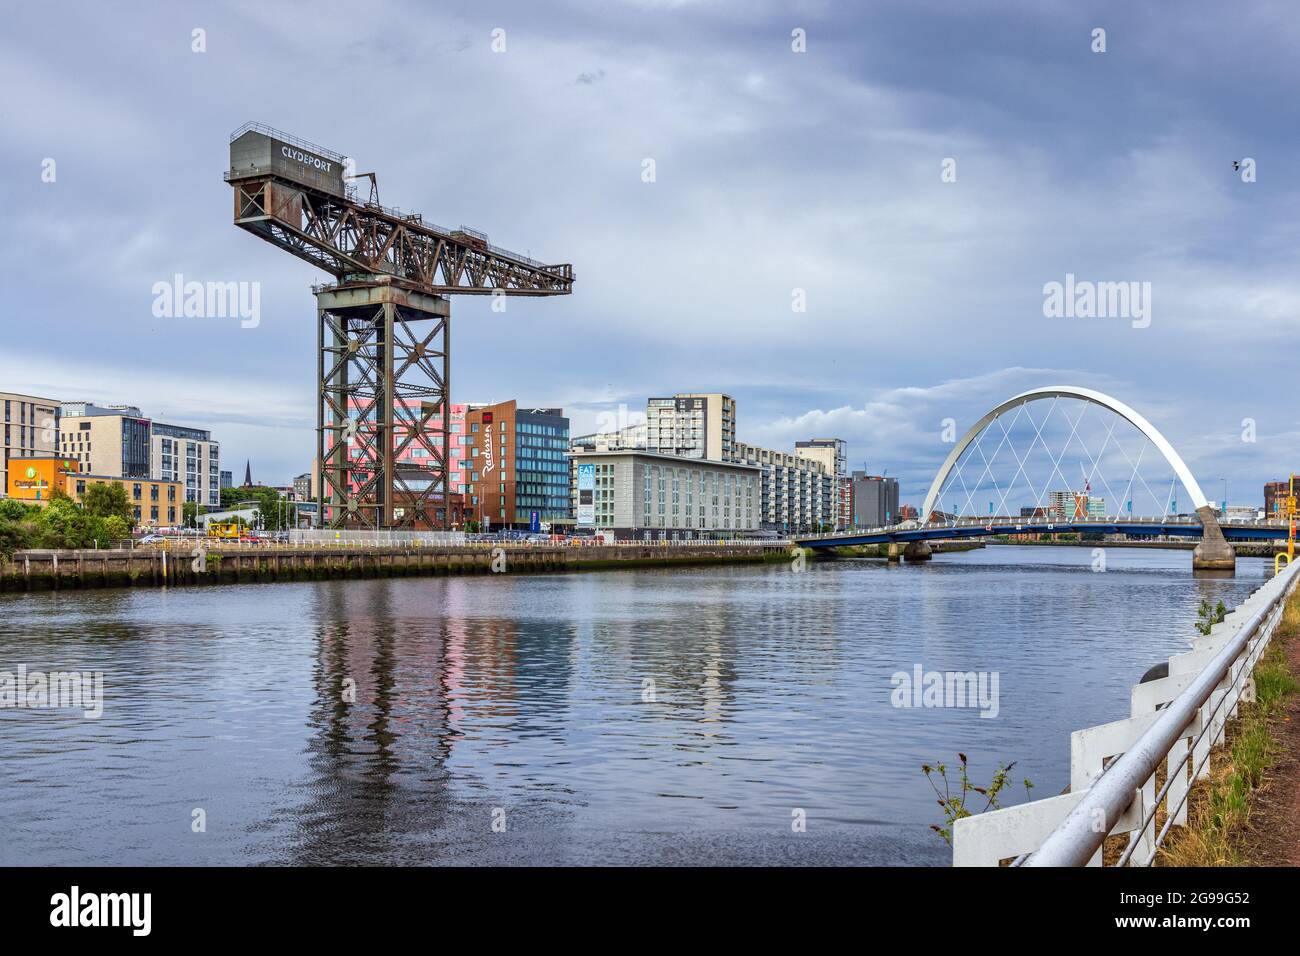 Glasgow's Finnieston Crane & Clyde Arc bridge over the River Clyde in Glasgow, Scotland. Stock Photo